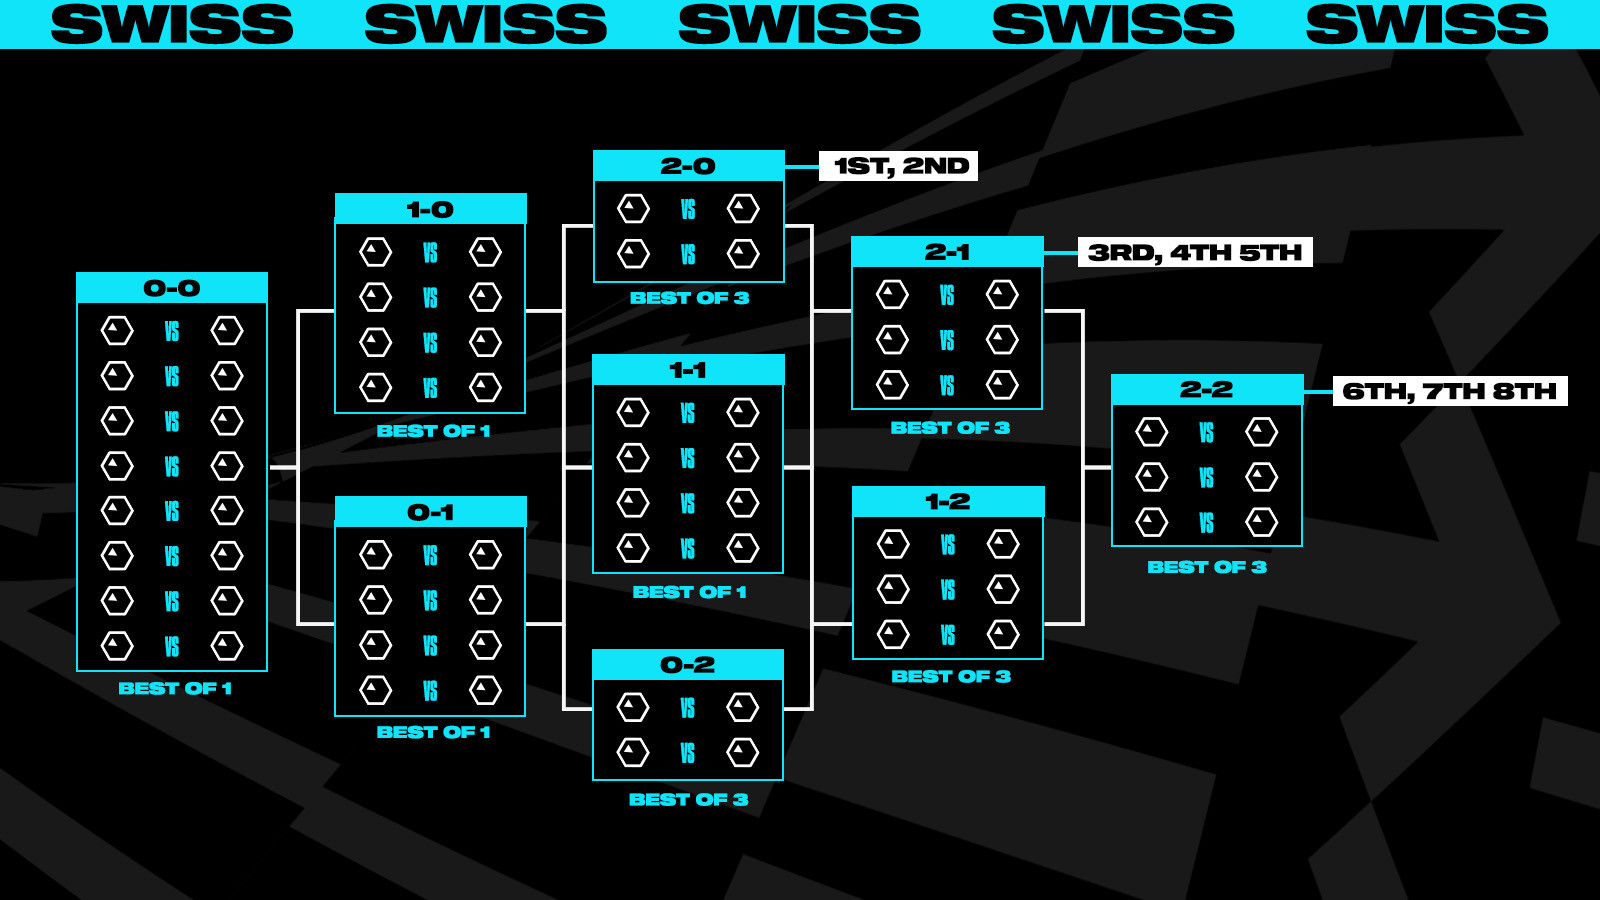 (Le Swiss Stage, système des Worlds 2023 Source : Riot Games)